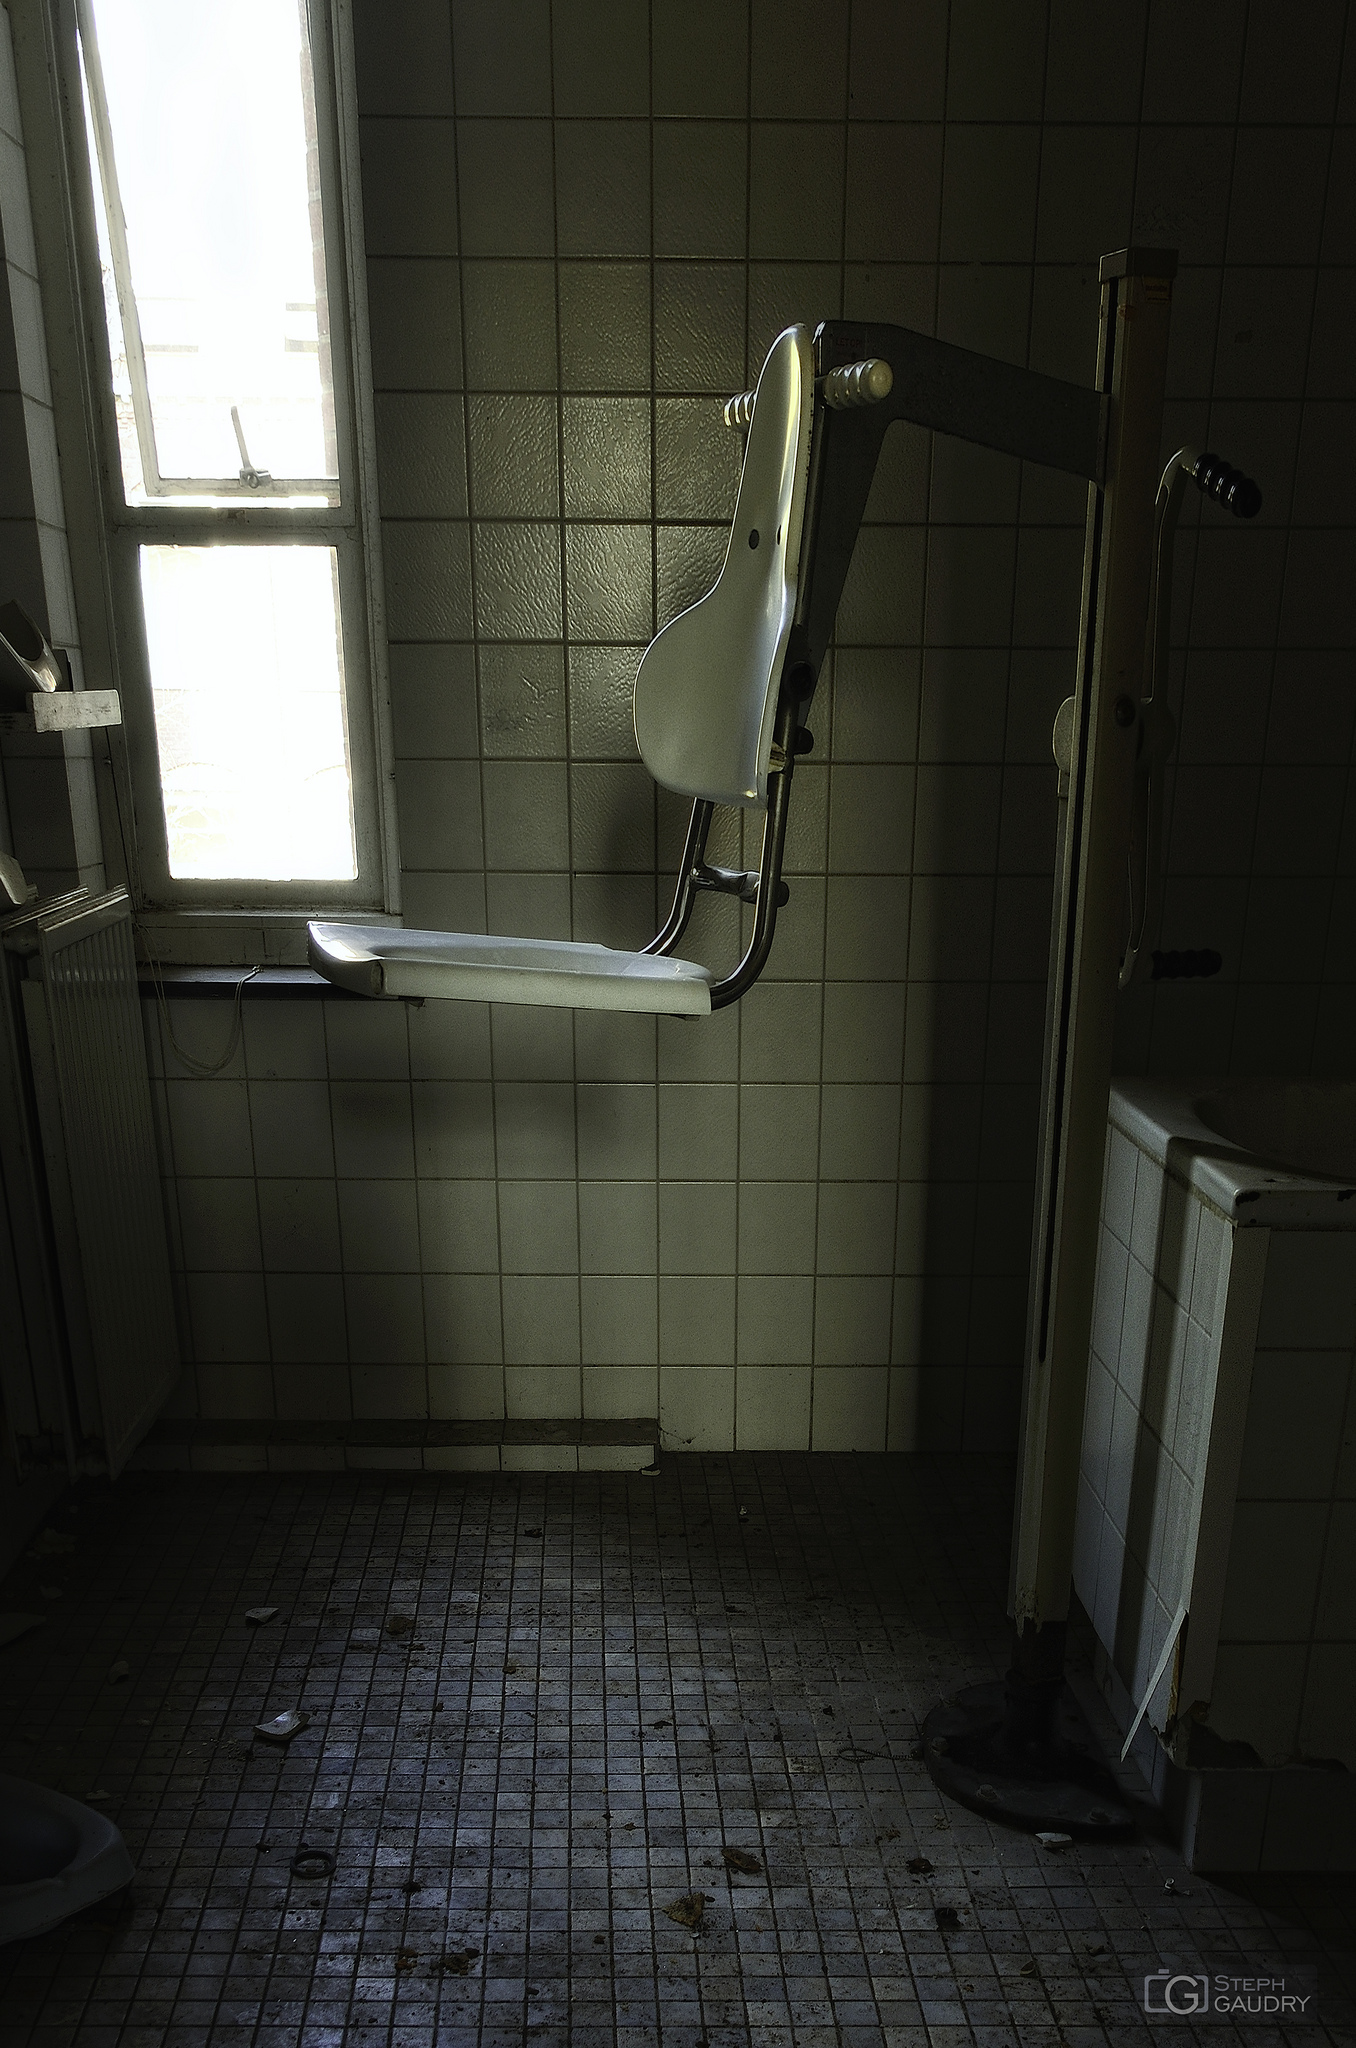 Medical bathroom [Click to start slideshow]